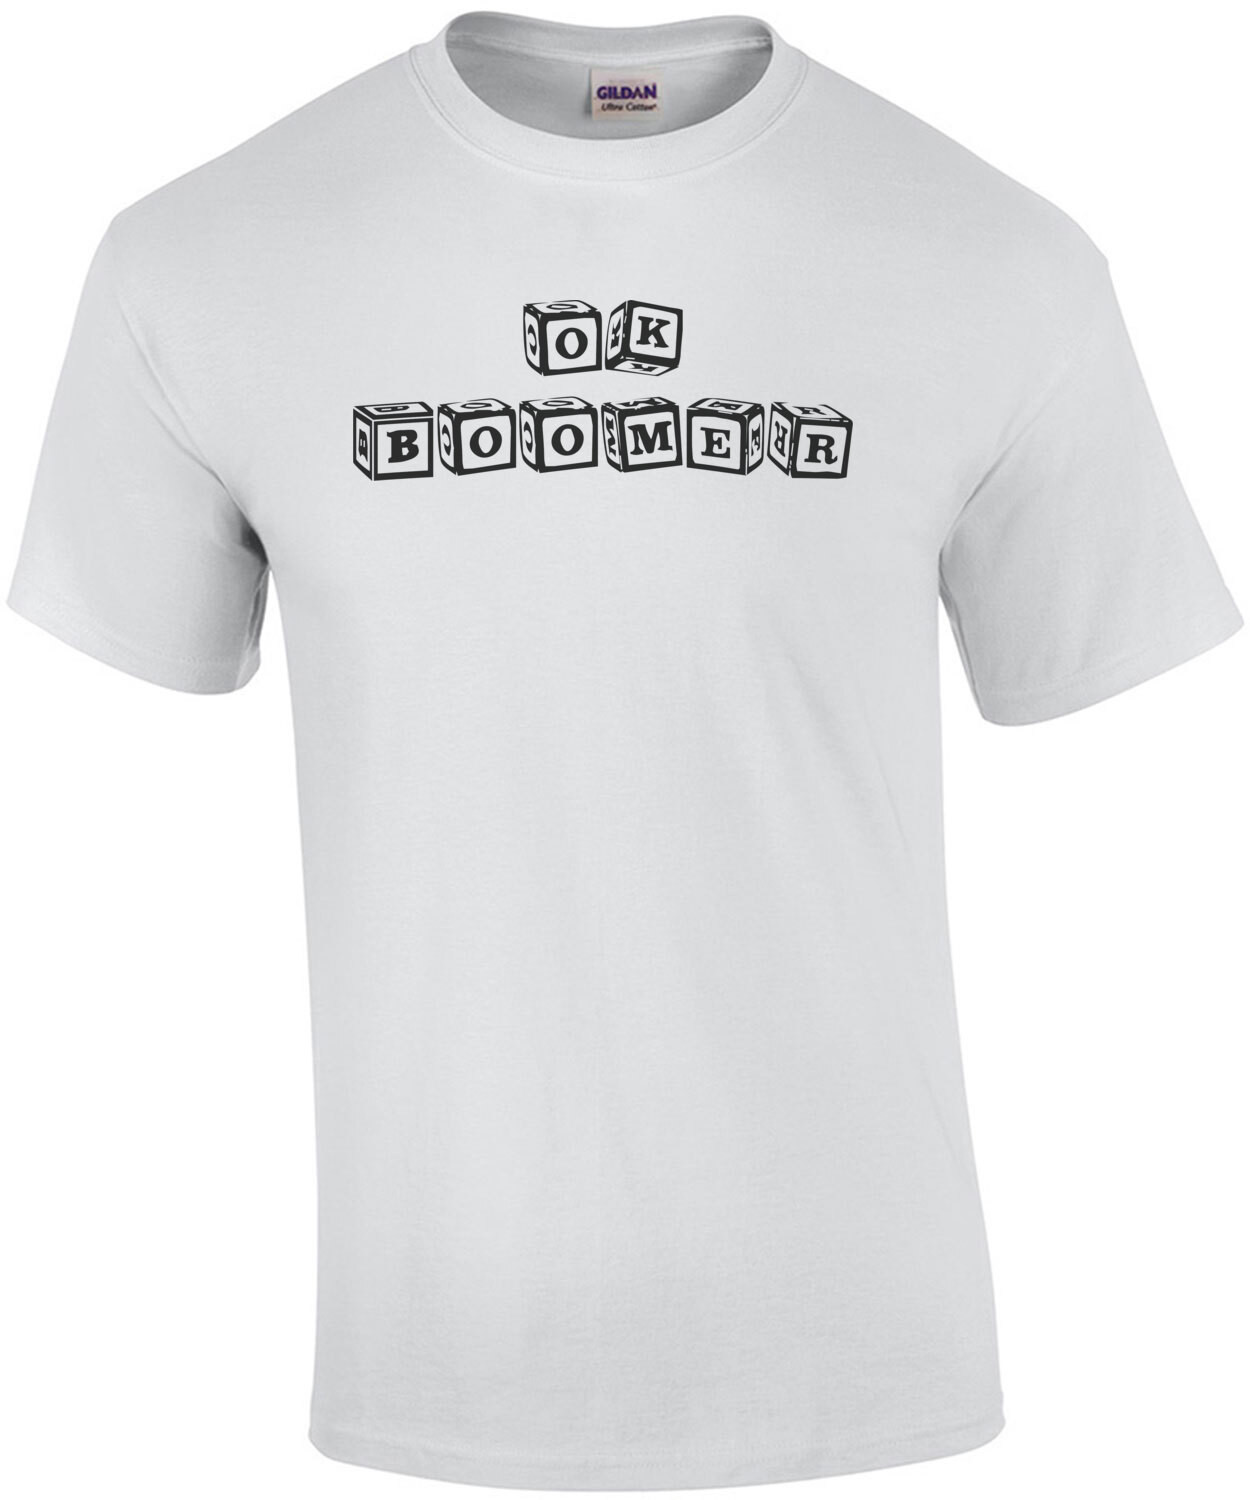 OK Boomer Funny T-Shirt